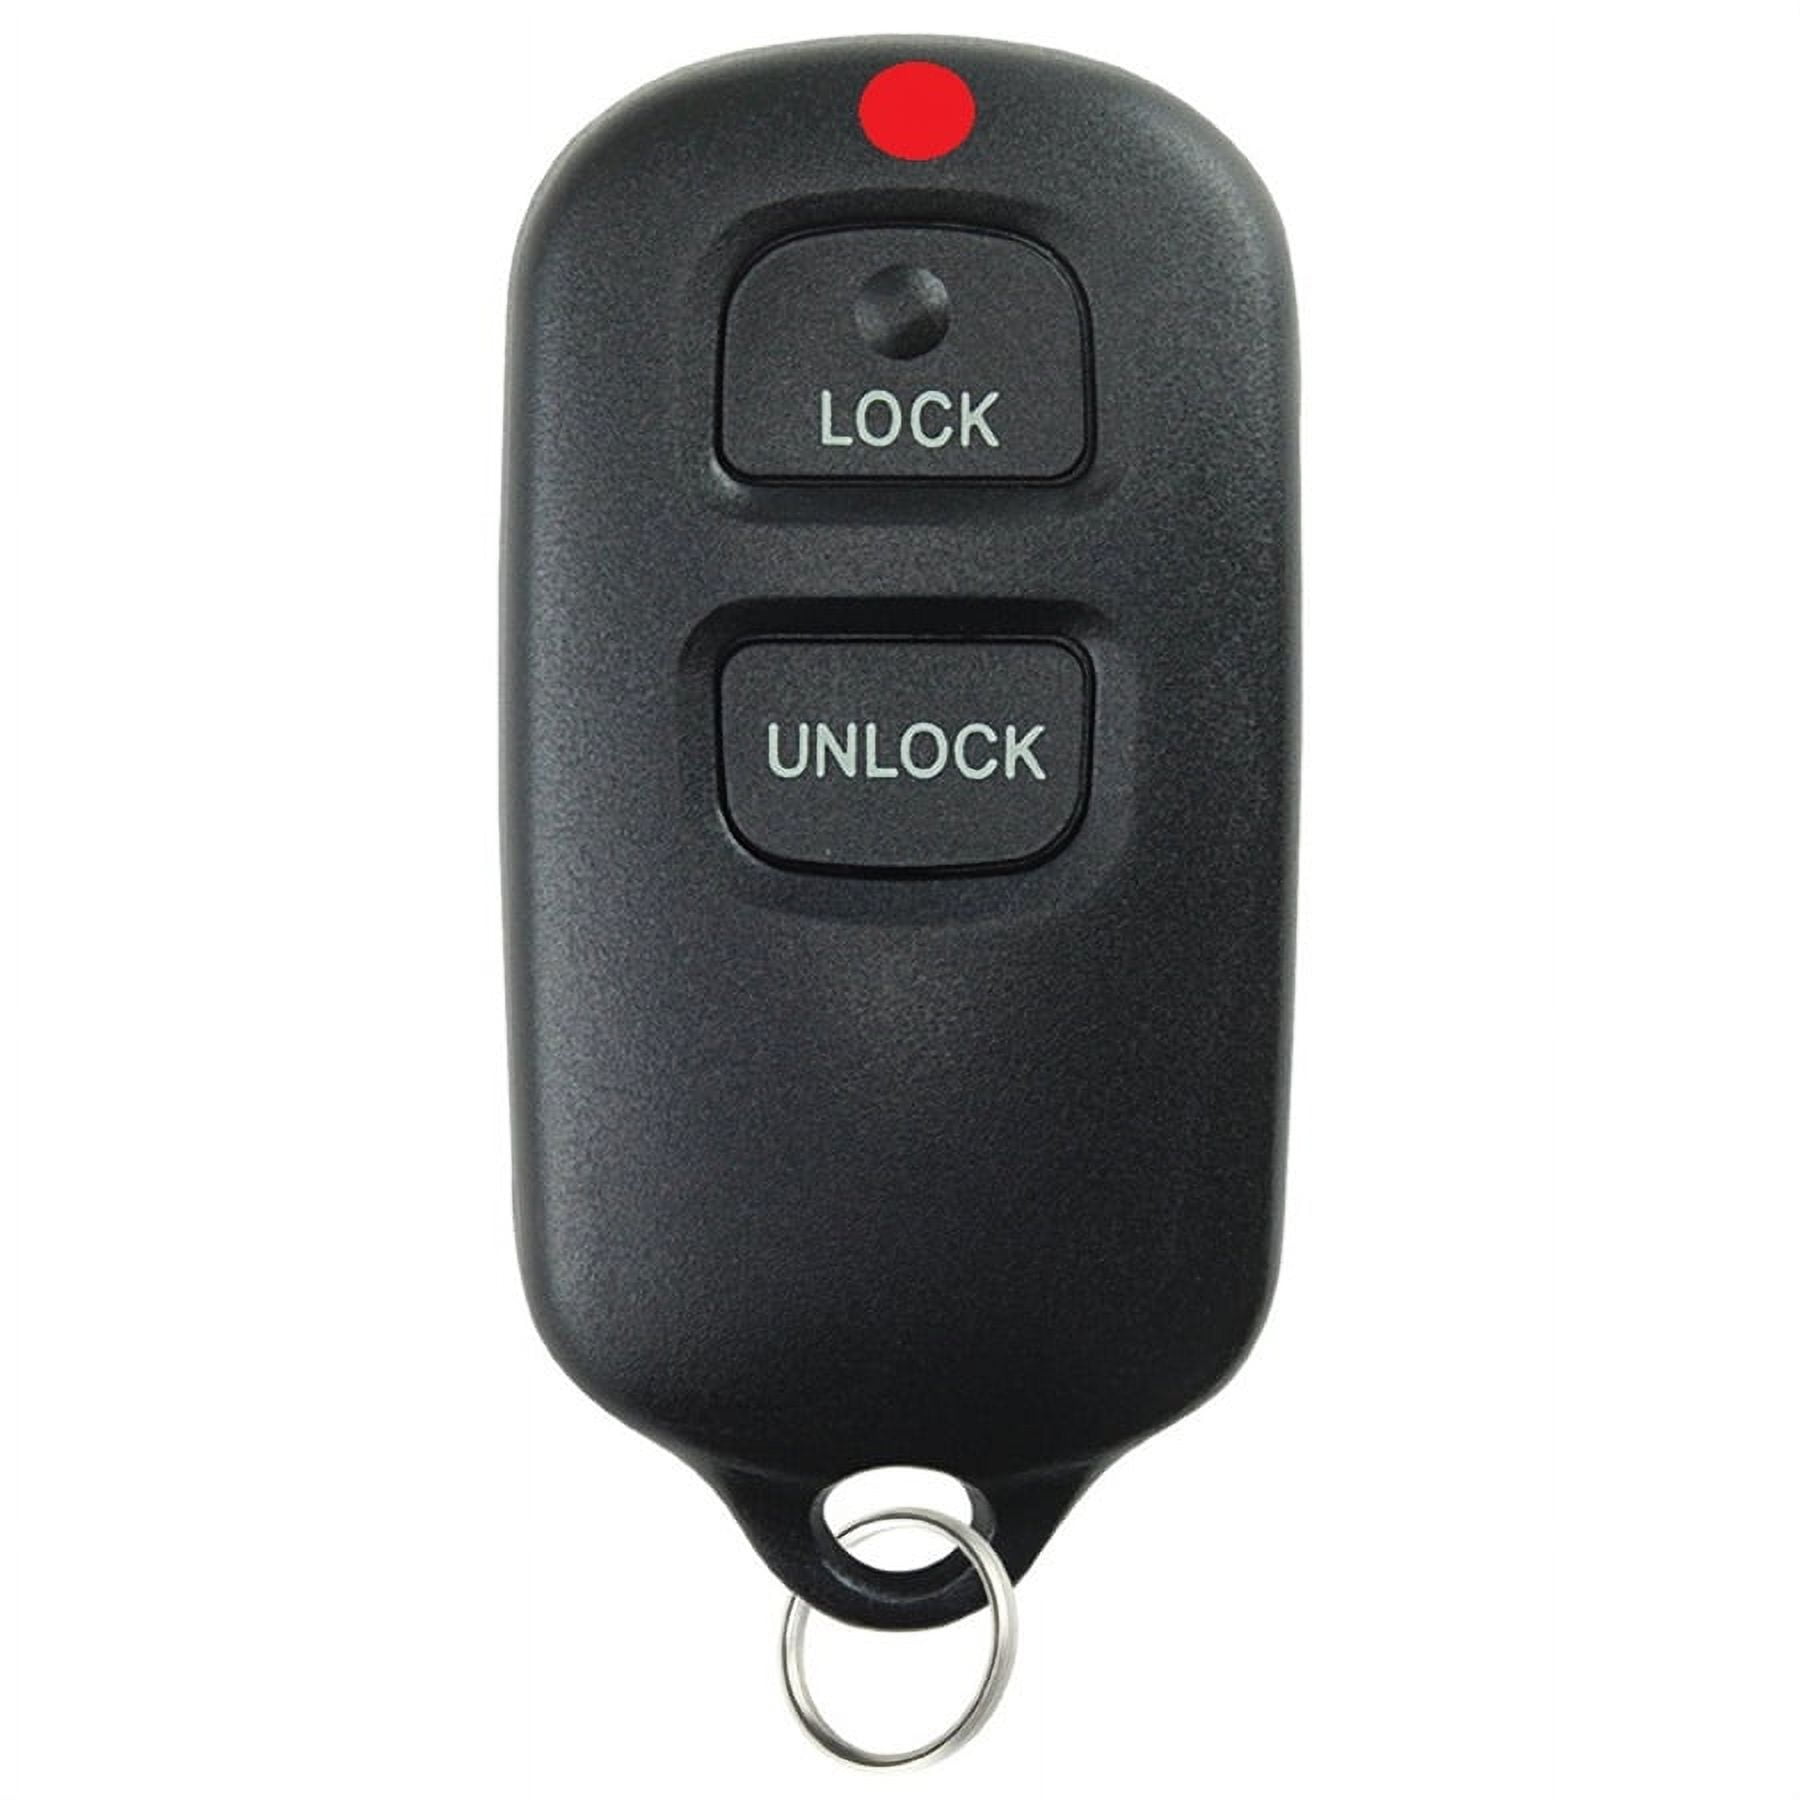  WOLDce Car Key CE0536 VA2 Blade Remote Control